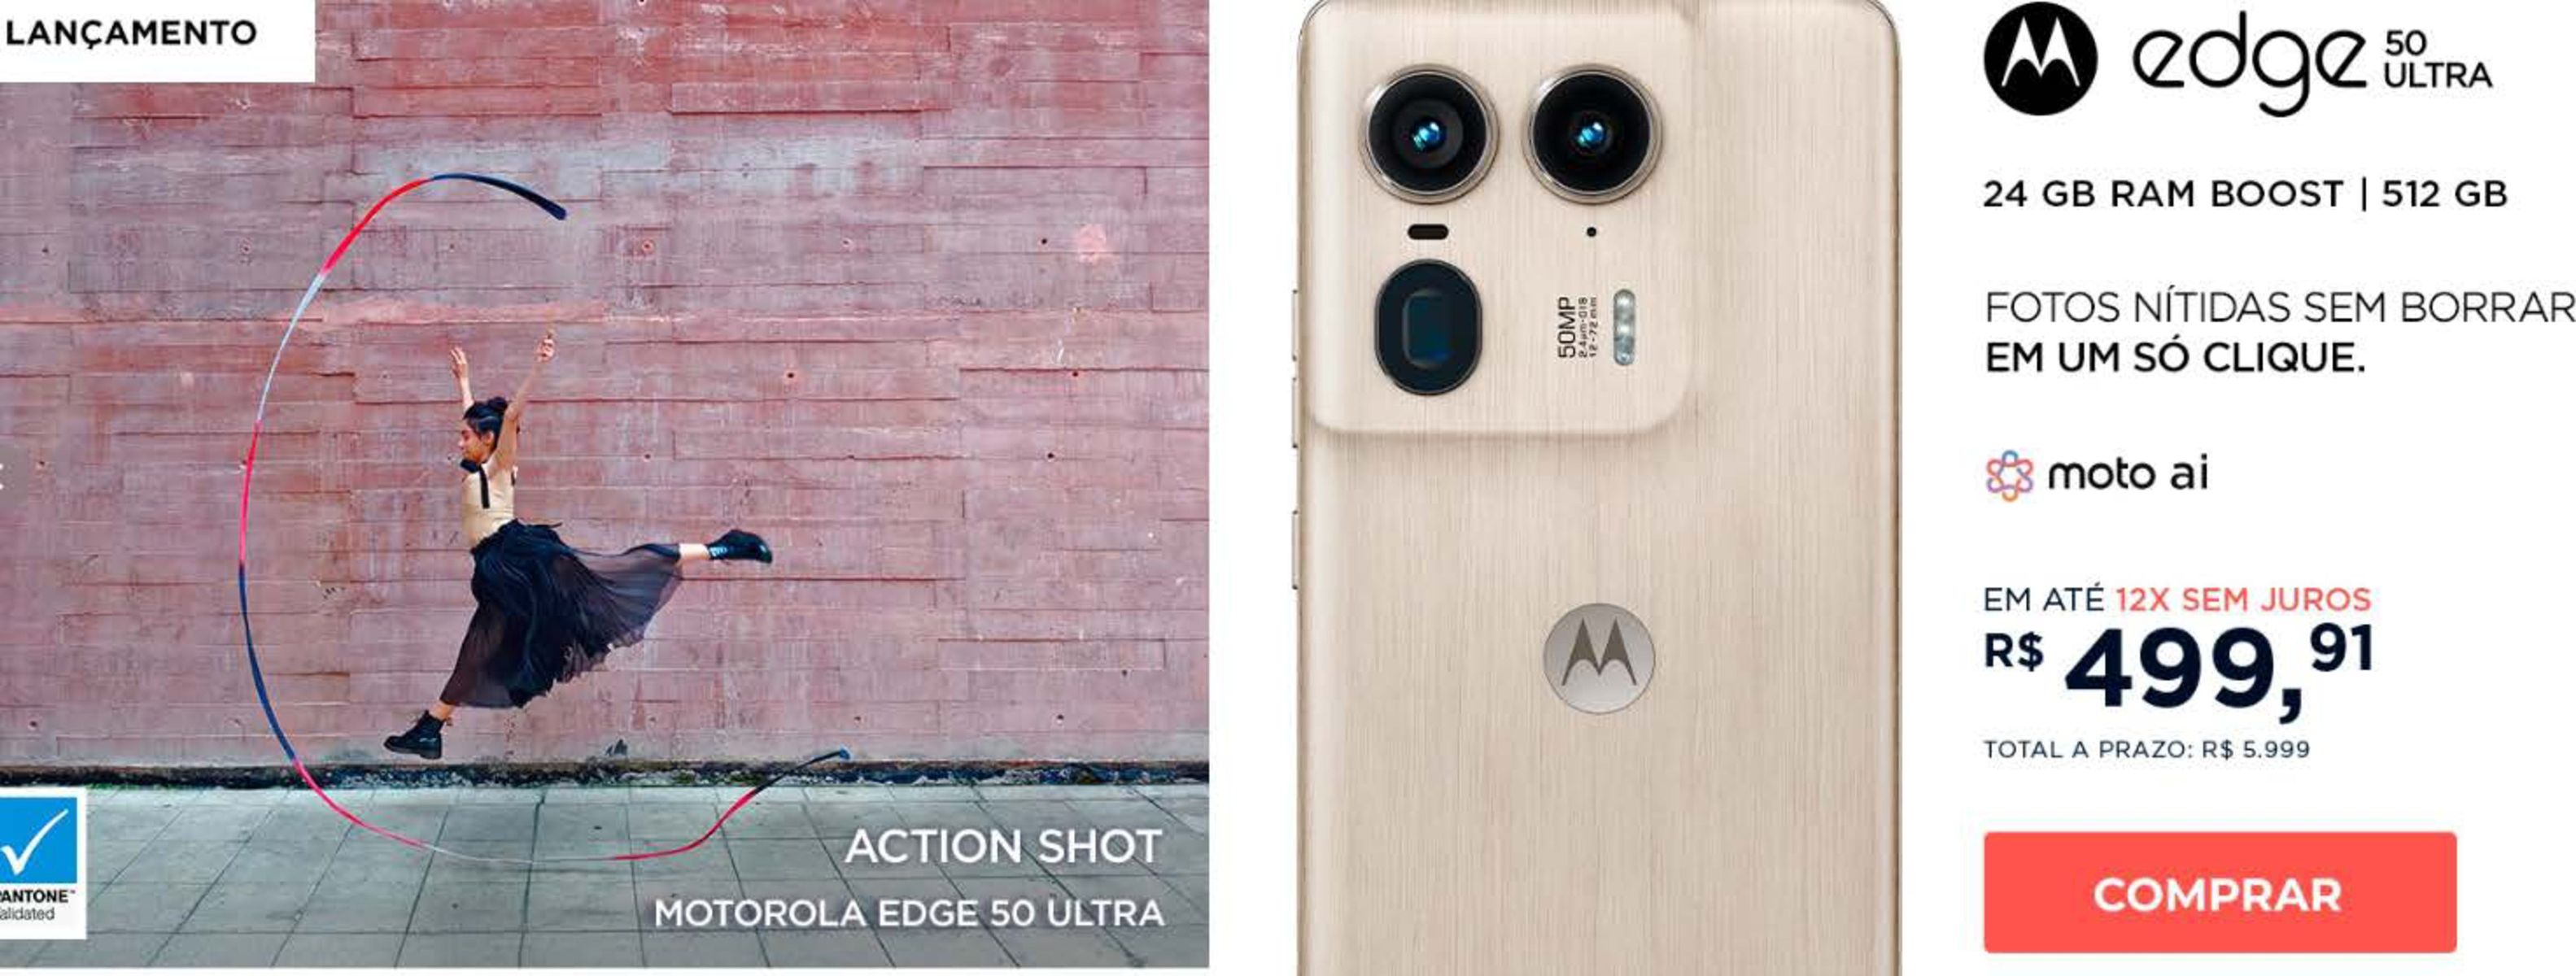 LANÇAMENTO Motorola Edge 50 Ultra | 24 GB RAM BOOST | 512GB